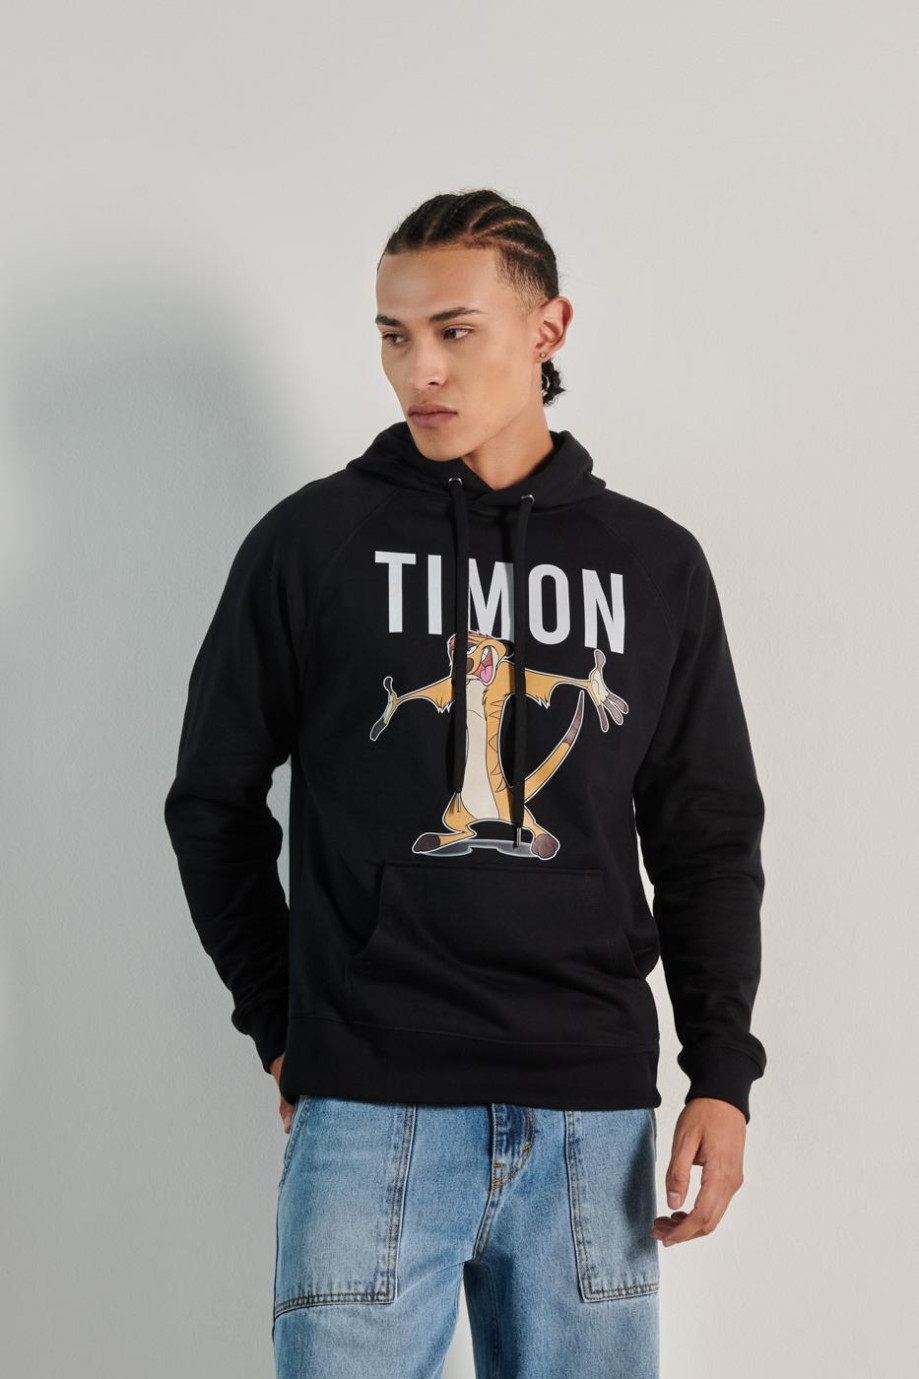 Buzo unicolor con capota, bolsillo y diseño de Timón en frente